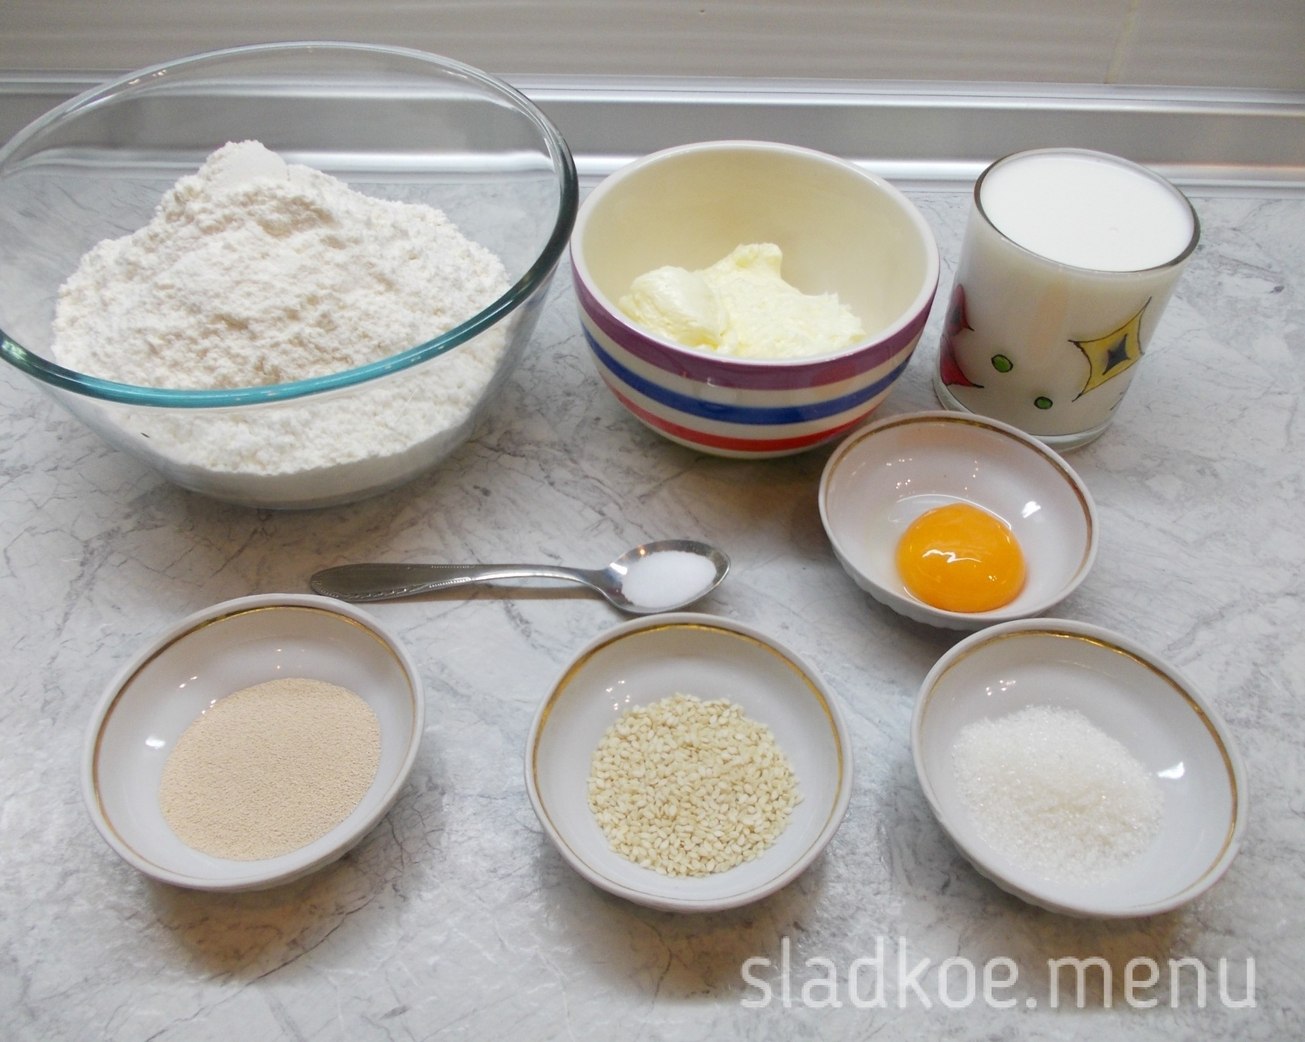 Мука масло маргарин. Соль сахар яйца мука. Ингредиенты для теста. Мука и масло. Молоко с мукой и дрожжами.